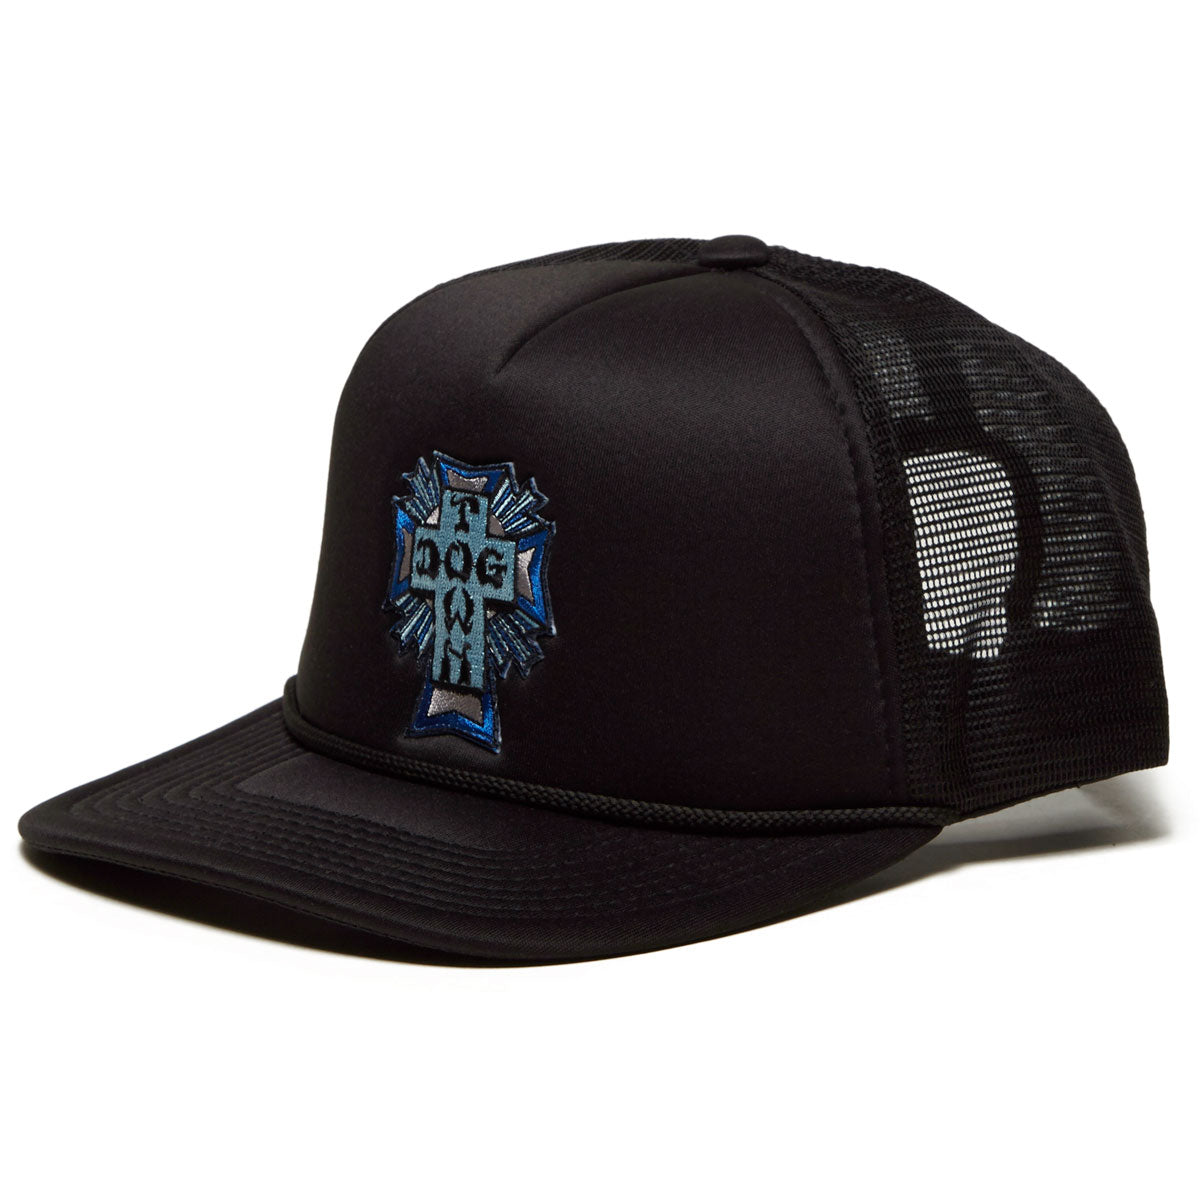 Dogtown Blue Cross Patch Mesh Hat - Black image 1